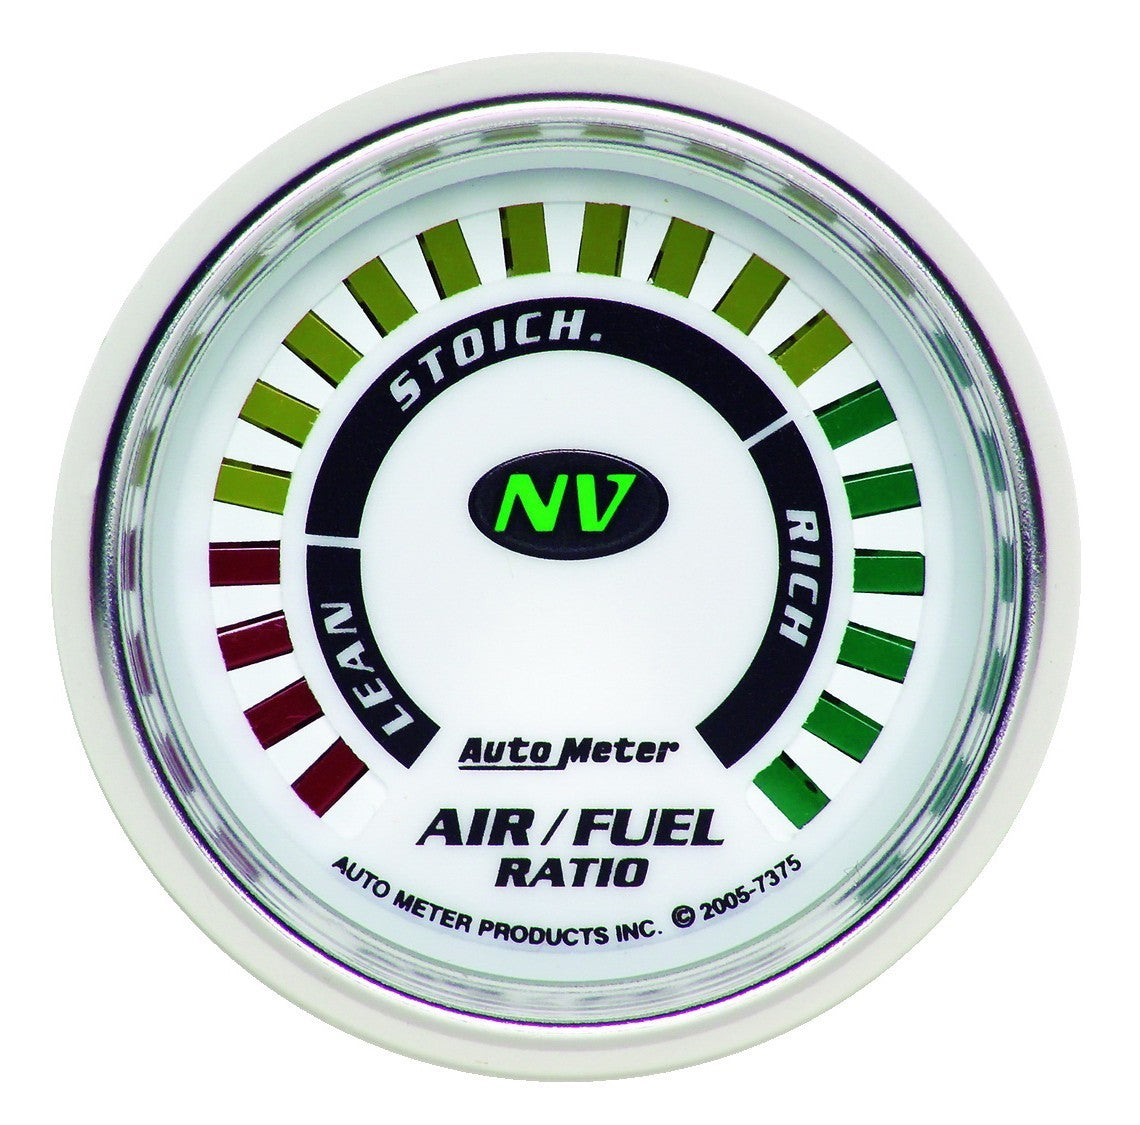 AutoMeter - 2-1/16" NARROWBAND AIR/FUEL RATIO, LEAN-RICH, NV (7375)